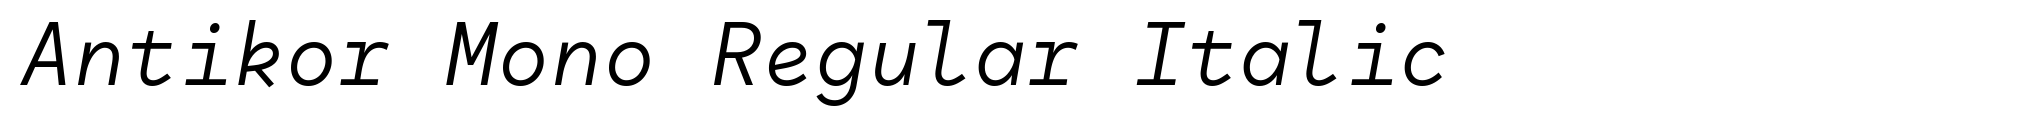 Antikor Mono Regular Italic image